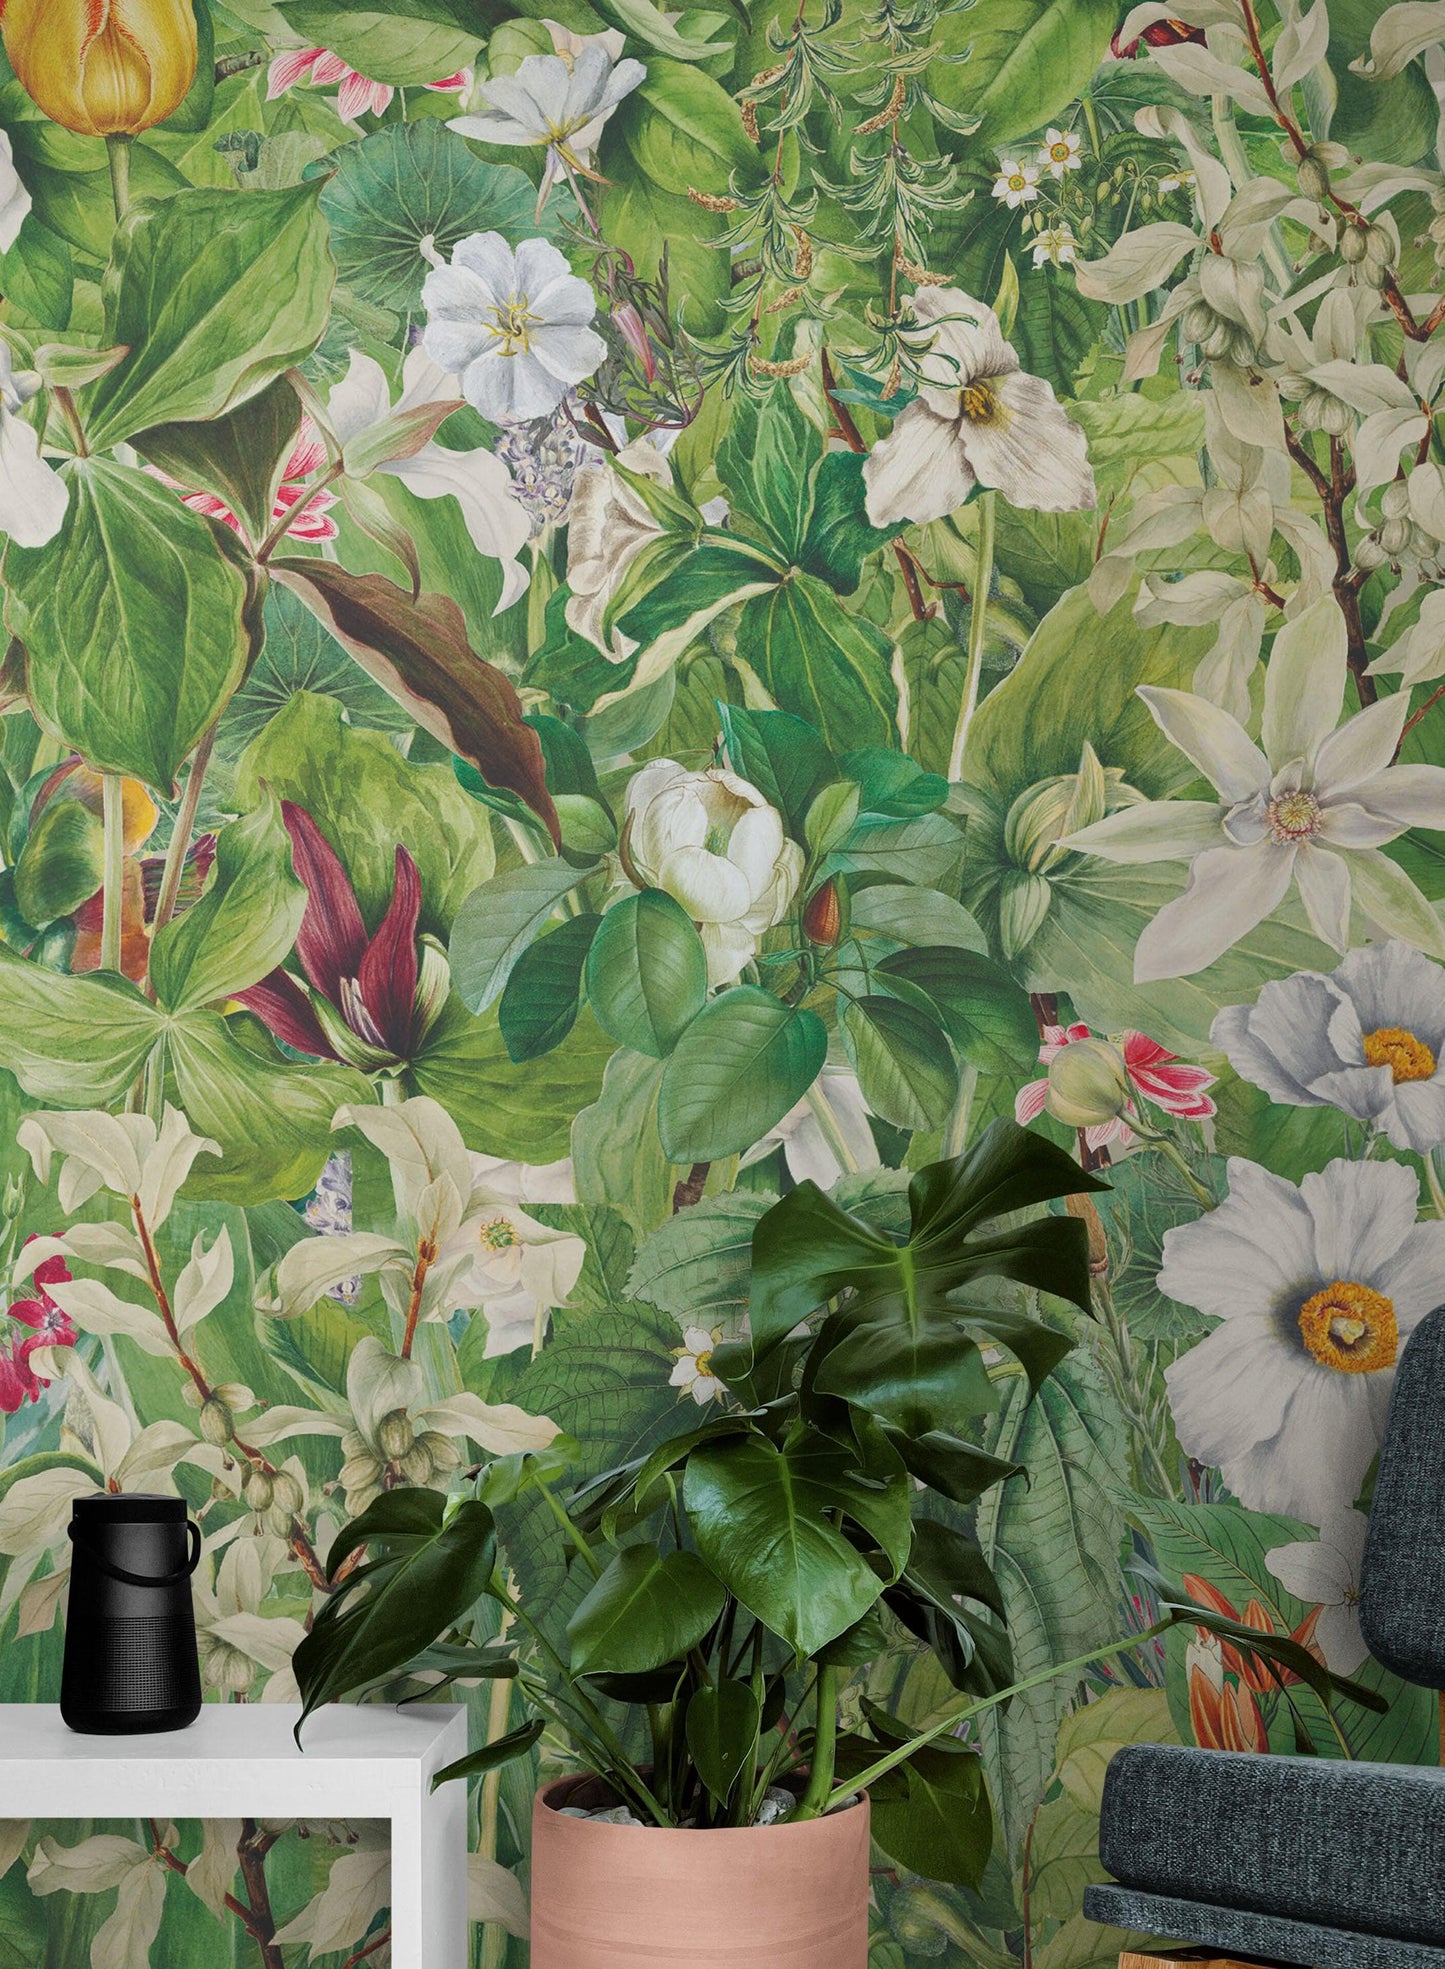 Botanical Vegetation Garden Wall Mural. Color Pencil Artwork of Flower Garden Peel and Stick Wallpaper. Rainforest Jungle Botanical Flowers and Leafs Background. #6449